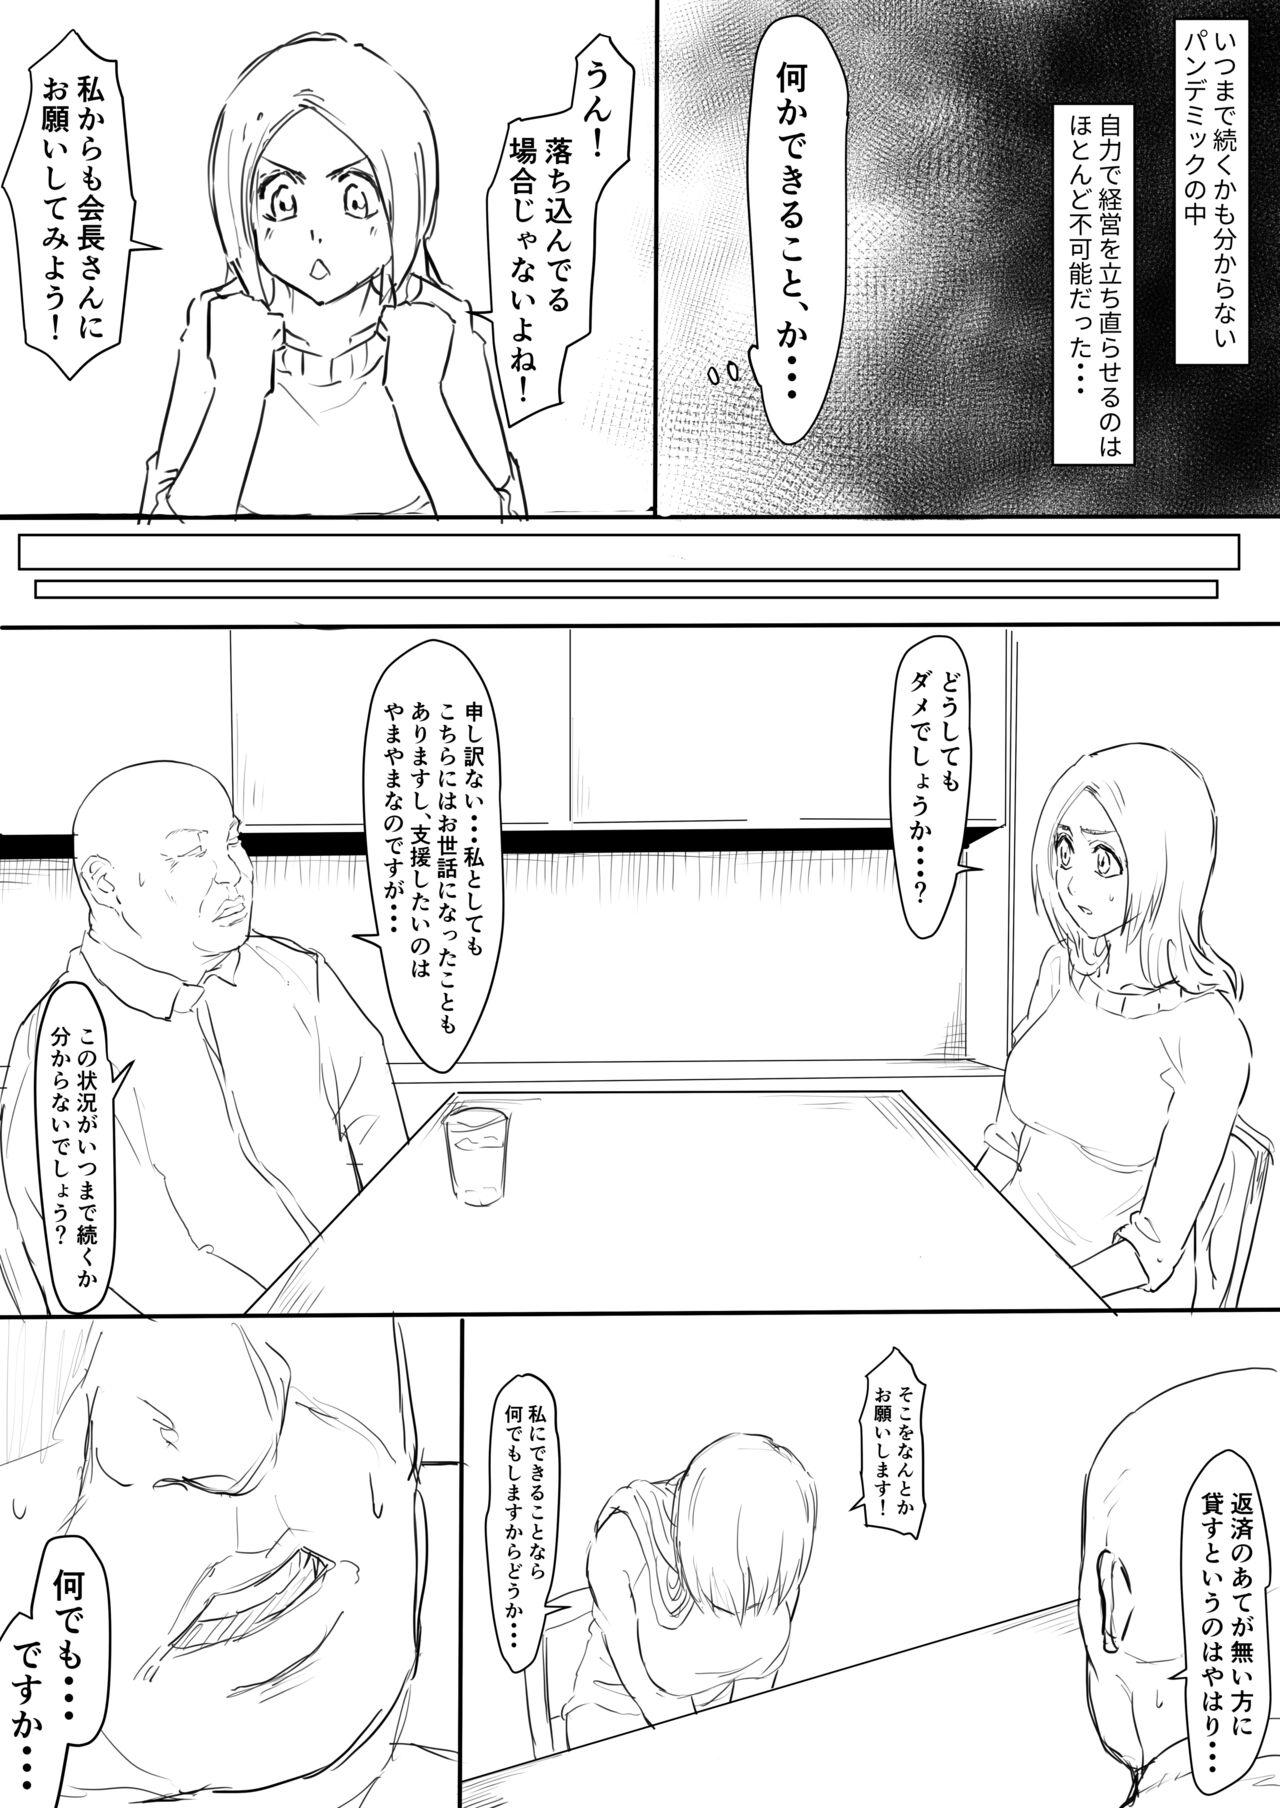 Bdsm Orihime Manga - Bleach Shoplifter - Picture 2